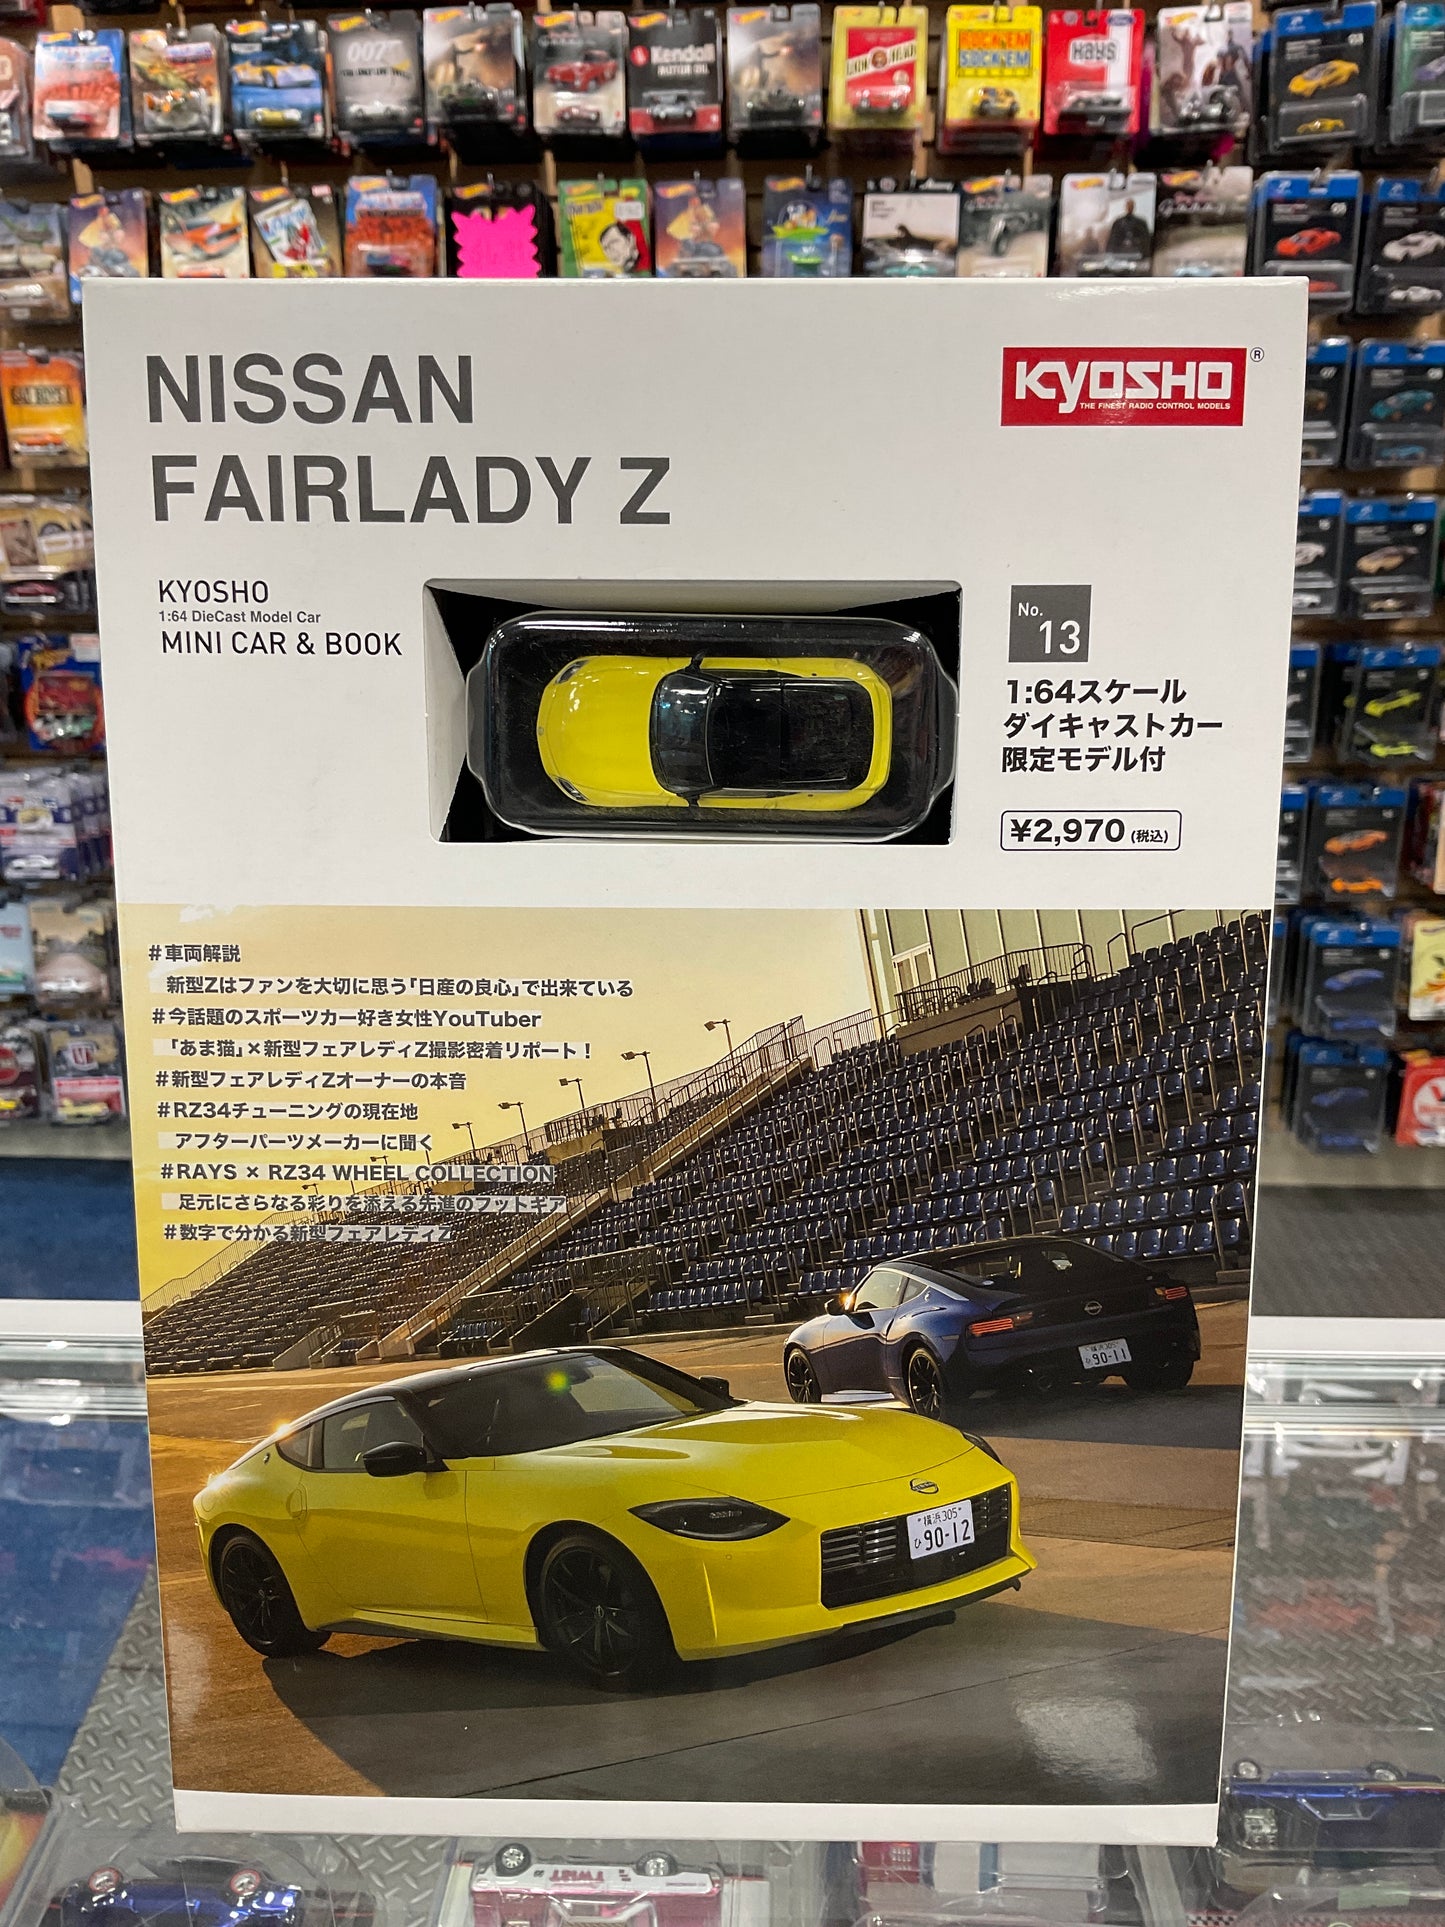 Kyosho mini book & car set #13 Nissan Fairlady Z yellow